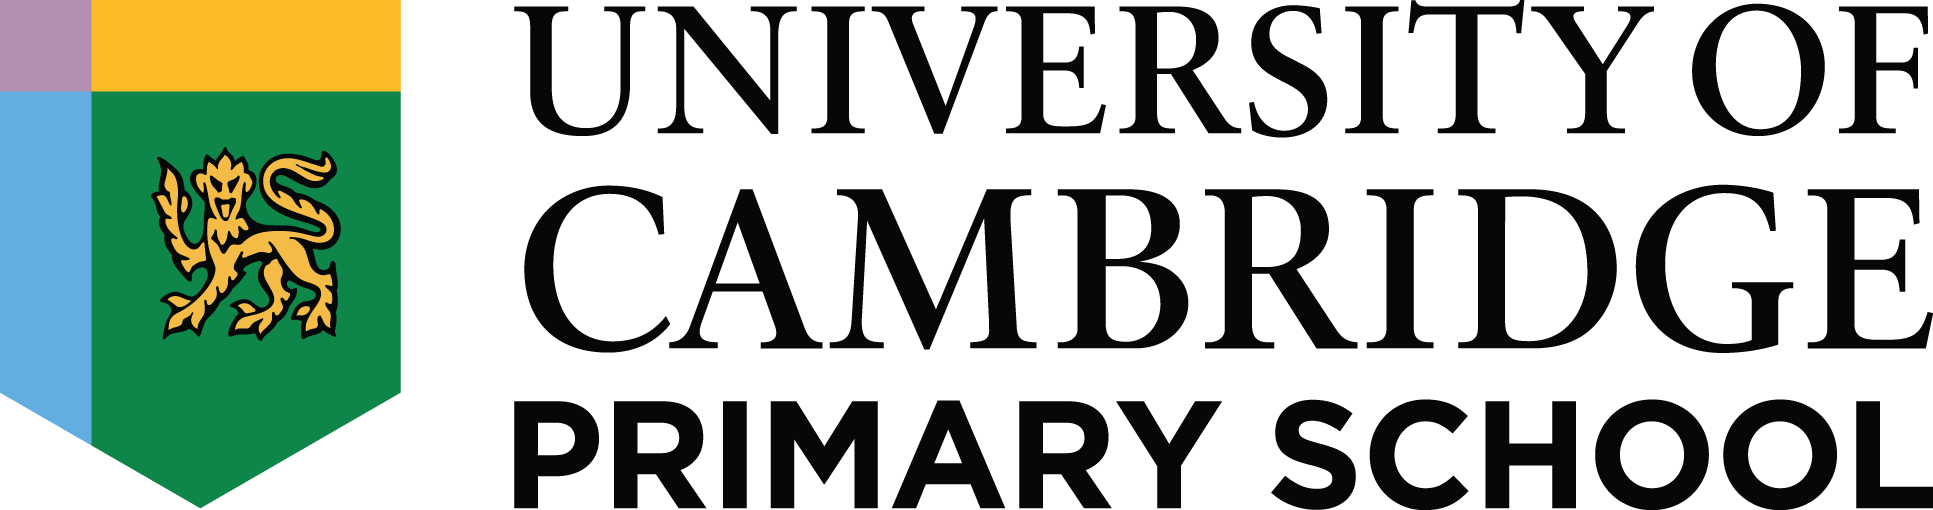 University of Cambridge Logo - University of Cambridge Primary School and Fundraising